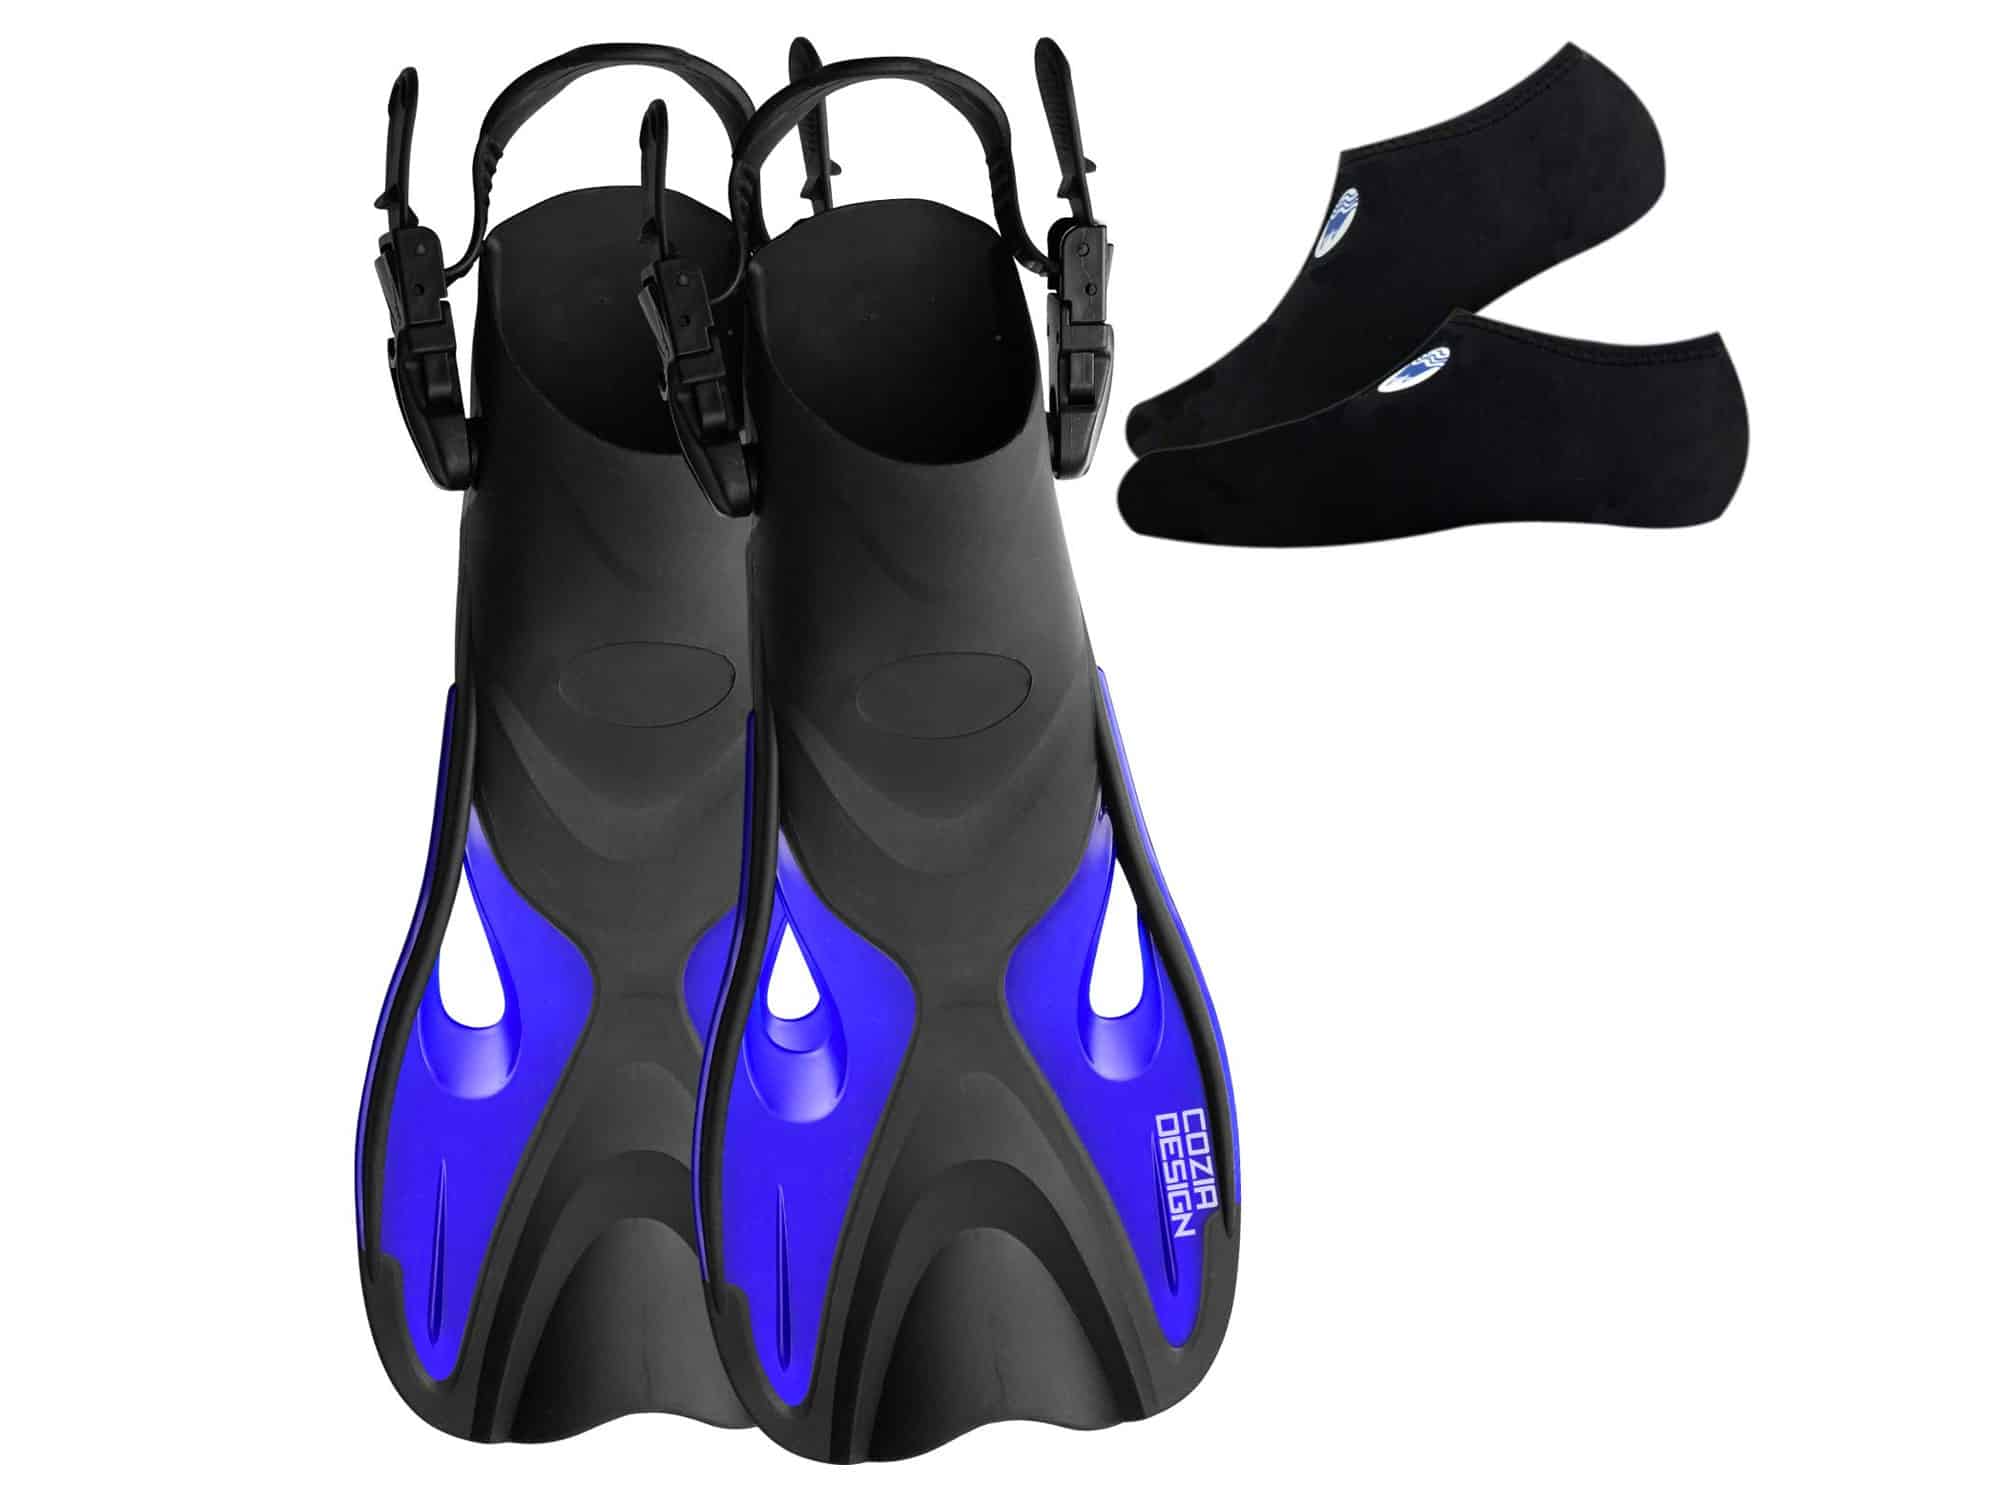 cozia design Adjustable Swim Fins - Snorkel Fins for Lap Swimming, Travel Size Scuba Diving Flippers for Snorkel Set Adult, Neoprene Water Socks Included